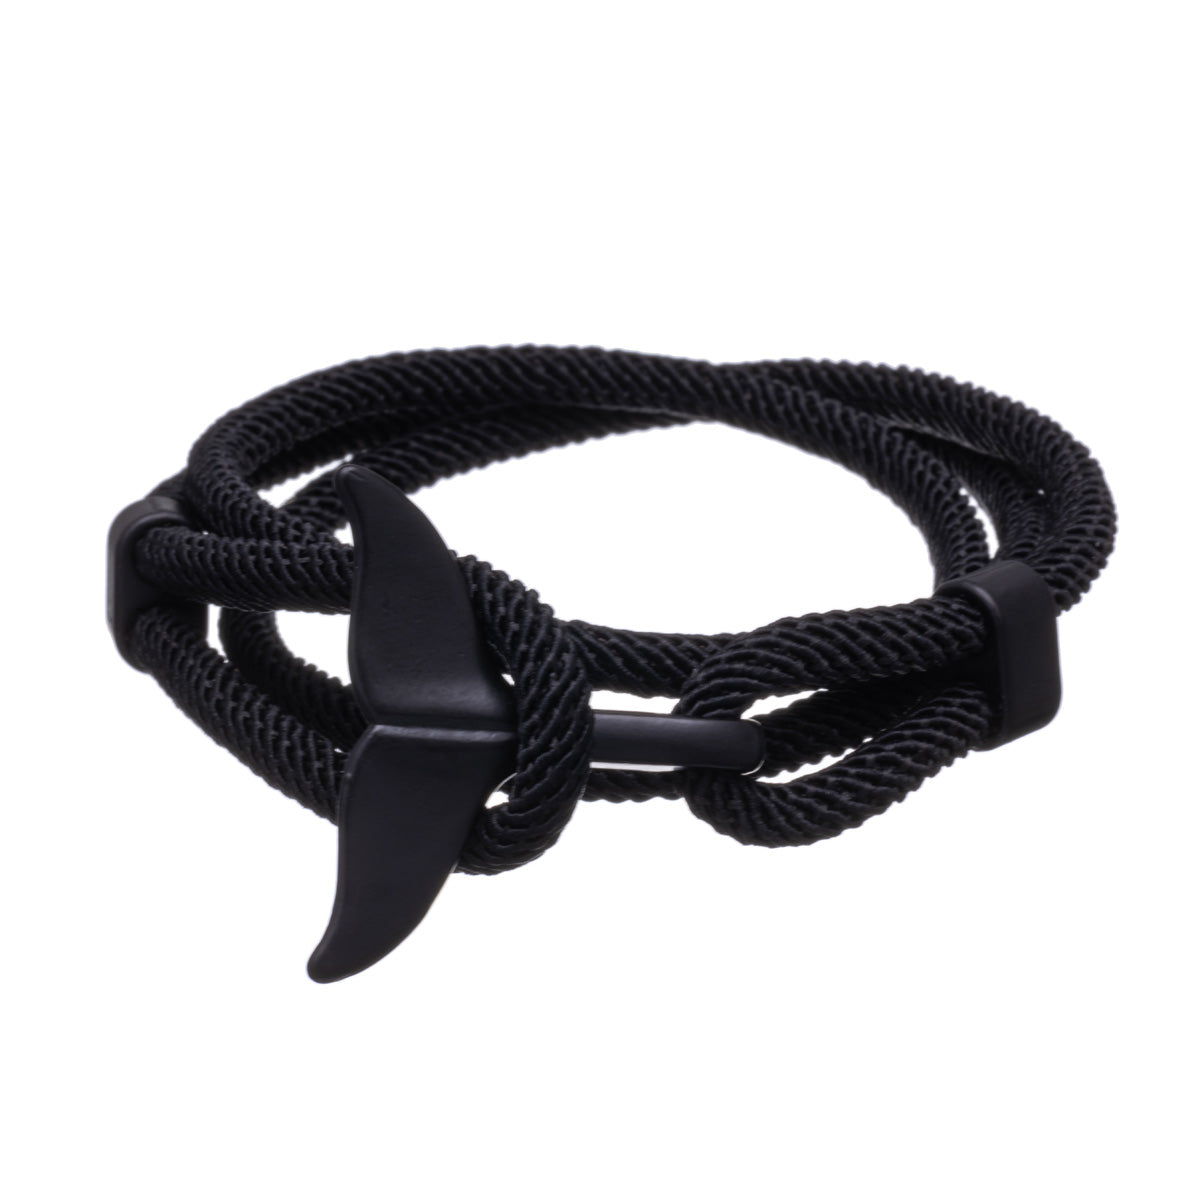 Wrap-around cord bracelet whale tail